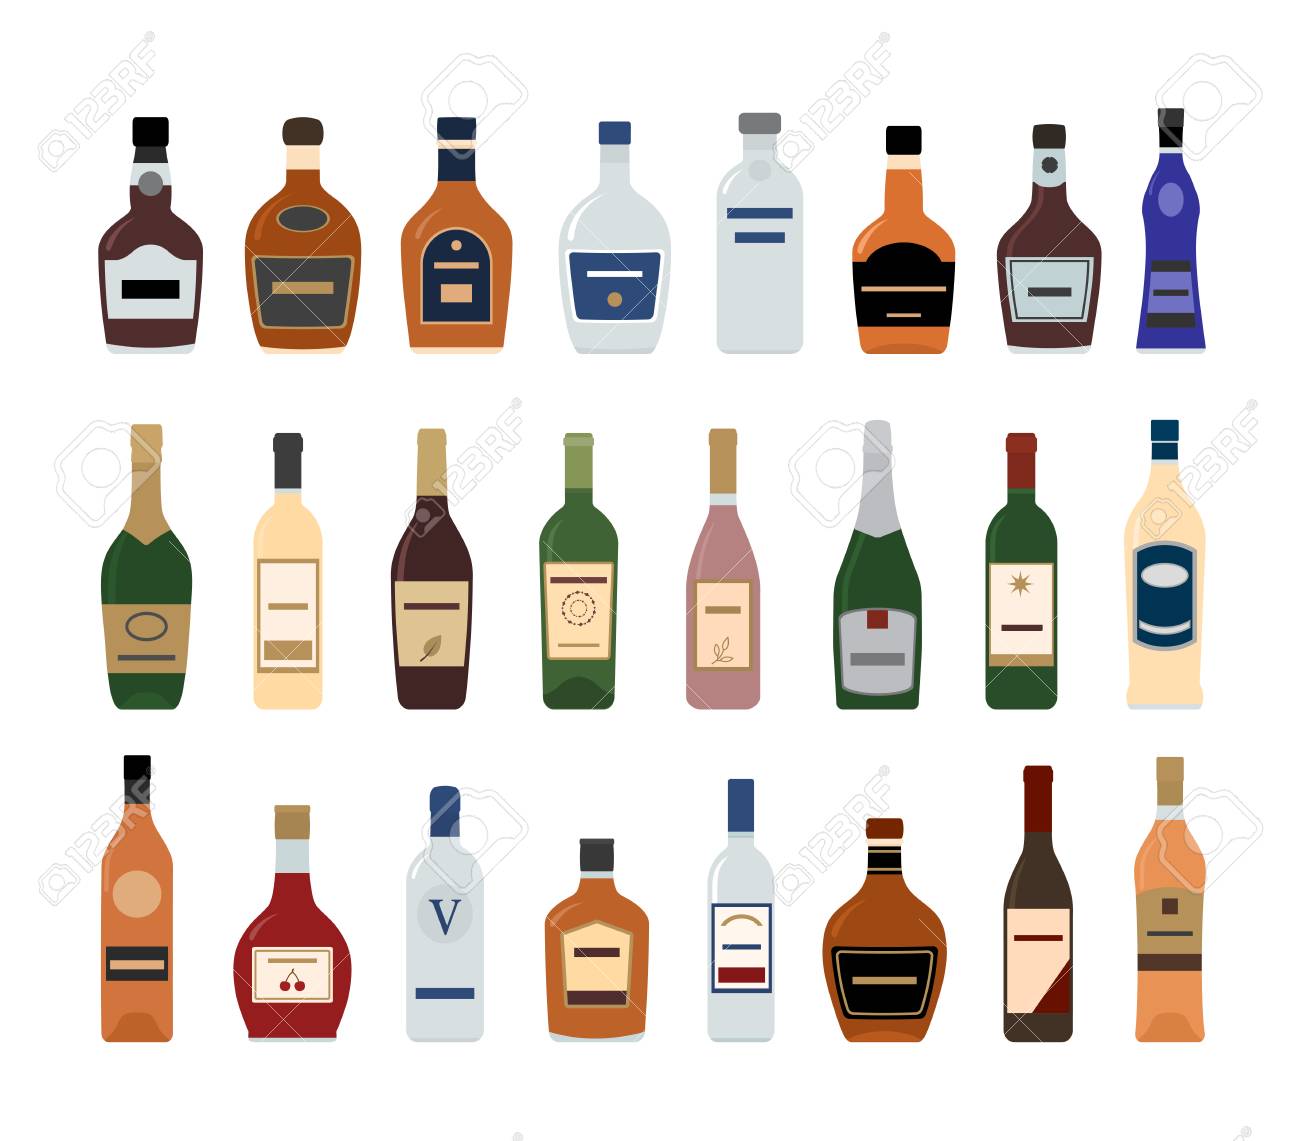 Alcohol Bottle Icons Isolated On White Background Large Vector